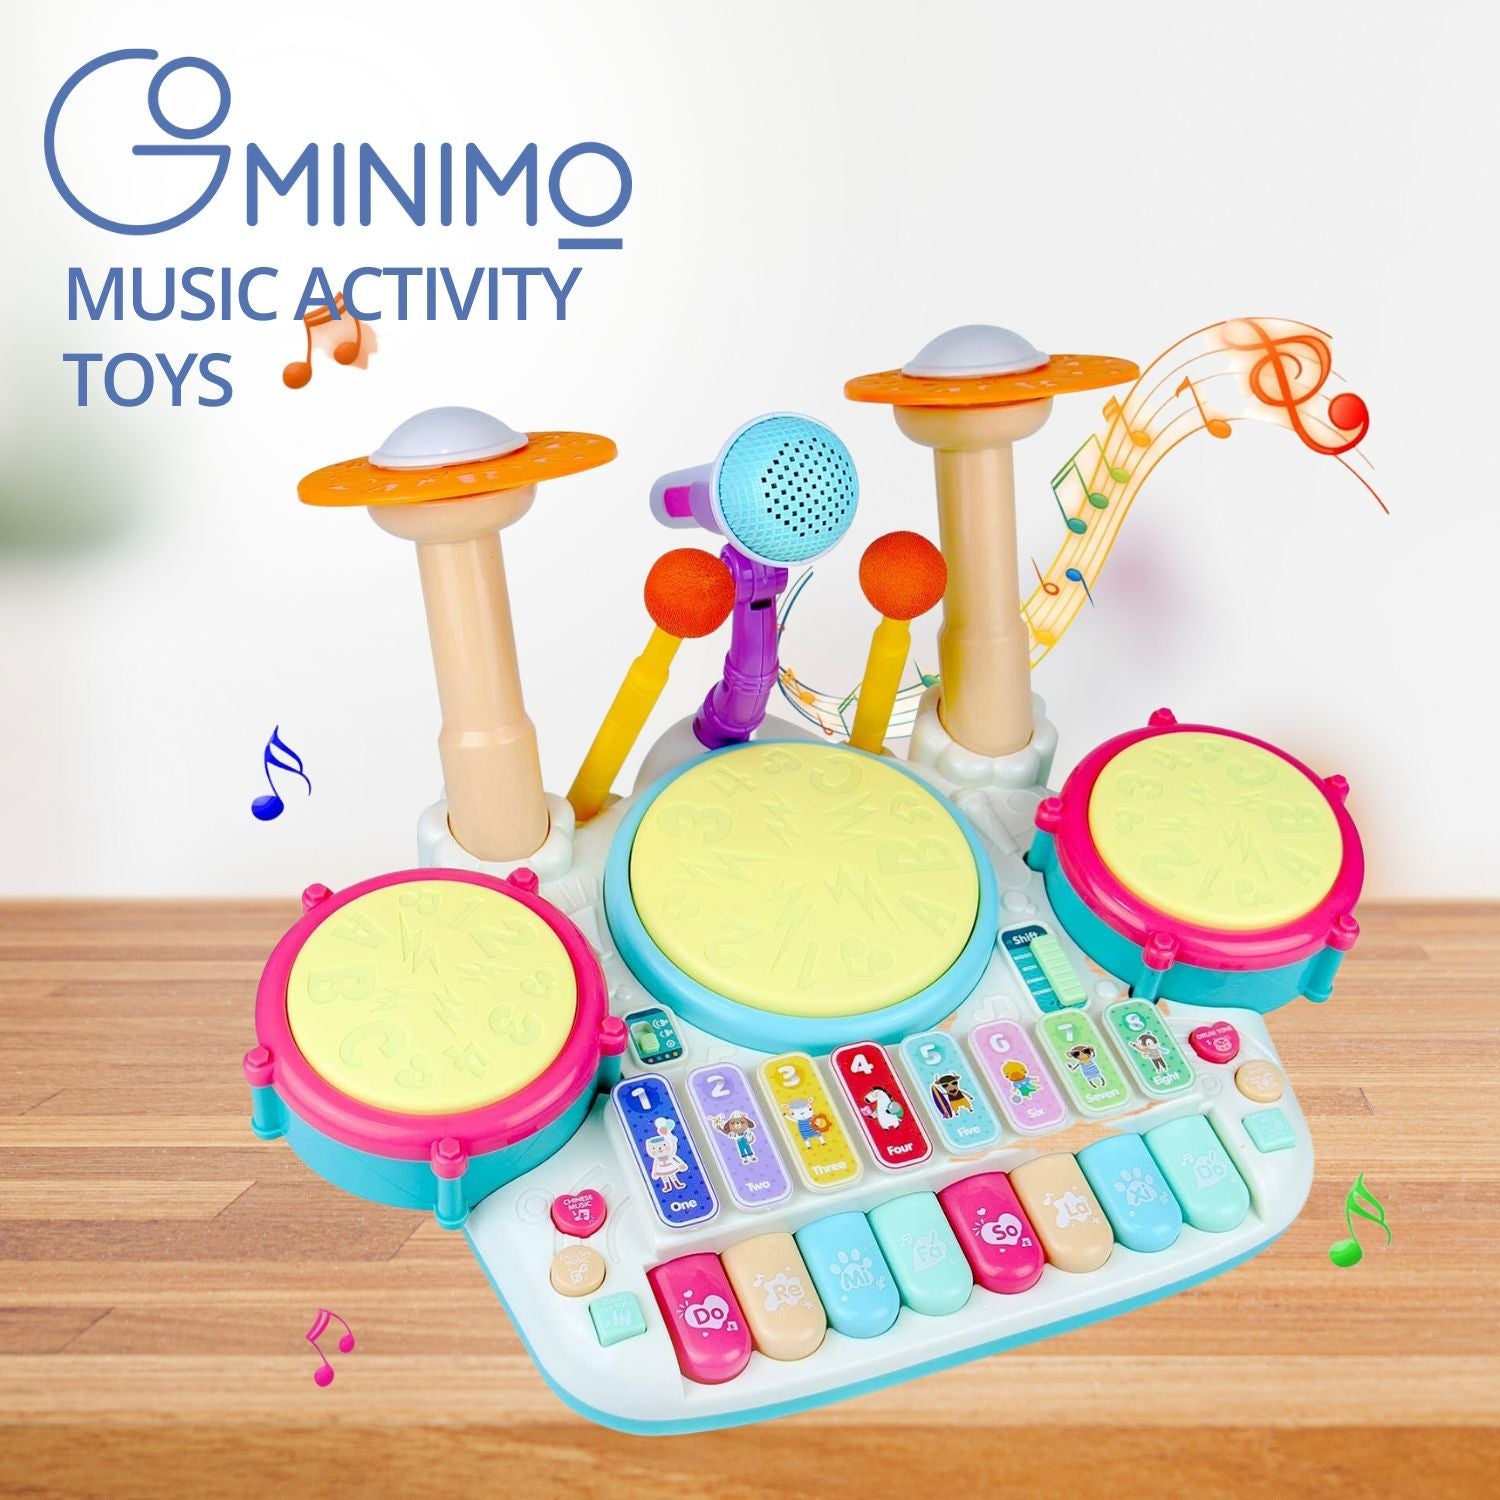 Gominimo Kids Toy Educational Drum Set